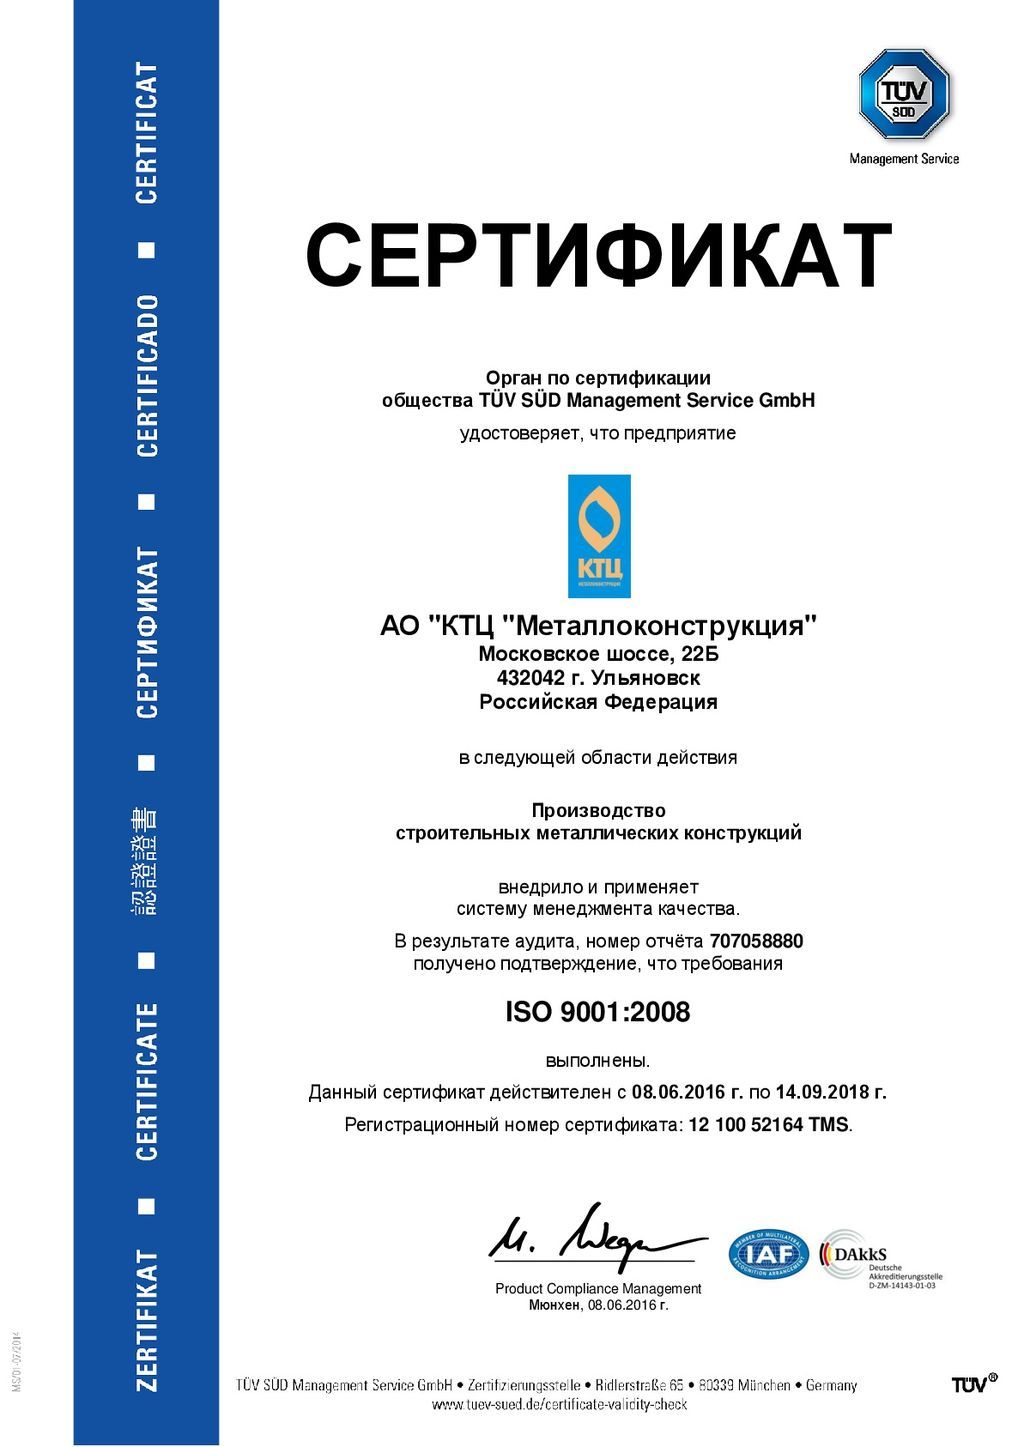 Сертификат № 1210052164 TMS, КТЦ Металлоконструкция